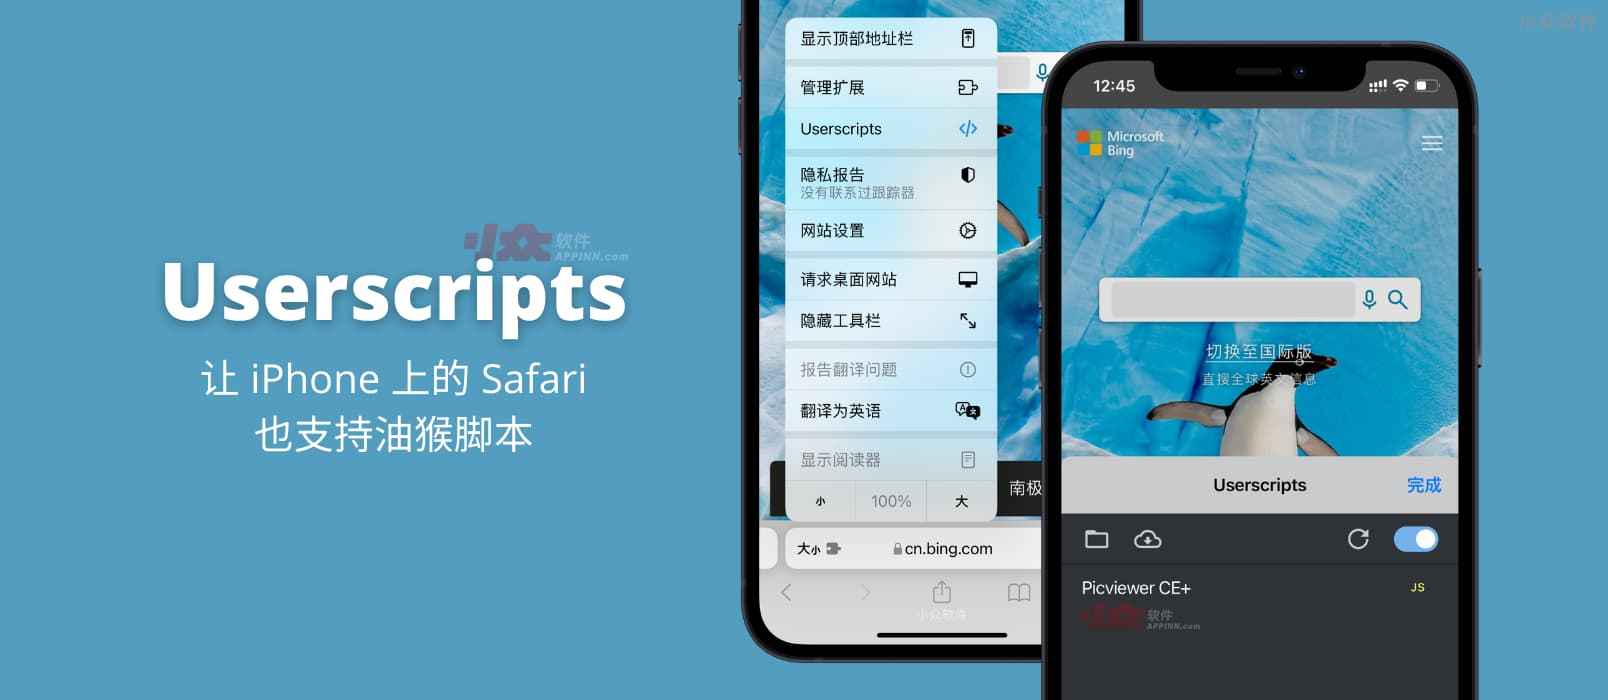 Userscripts – 免费开源的「油猴脚本」管理器，让 iPhone 上的 Safari 也支持油猴脚本